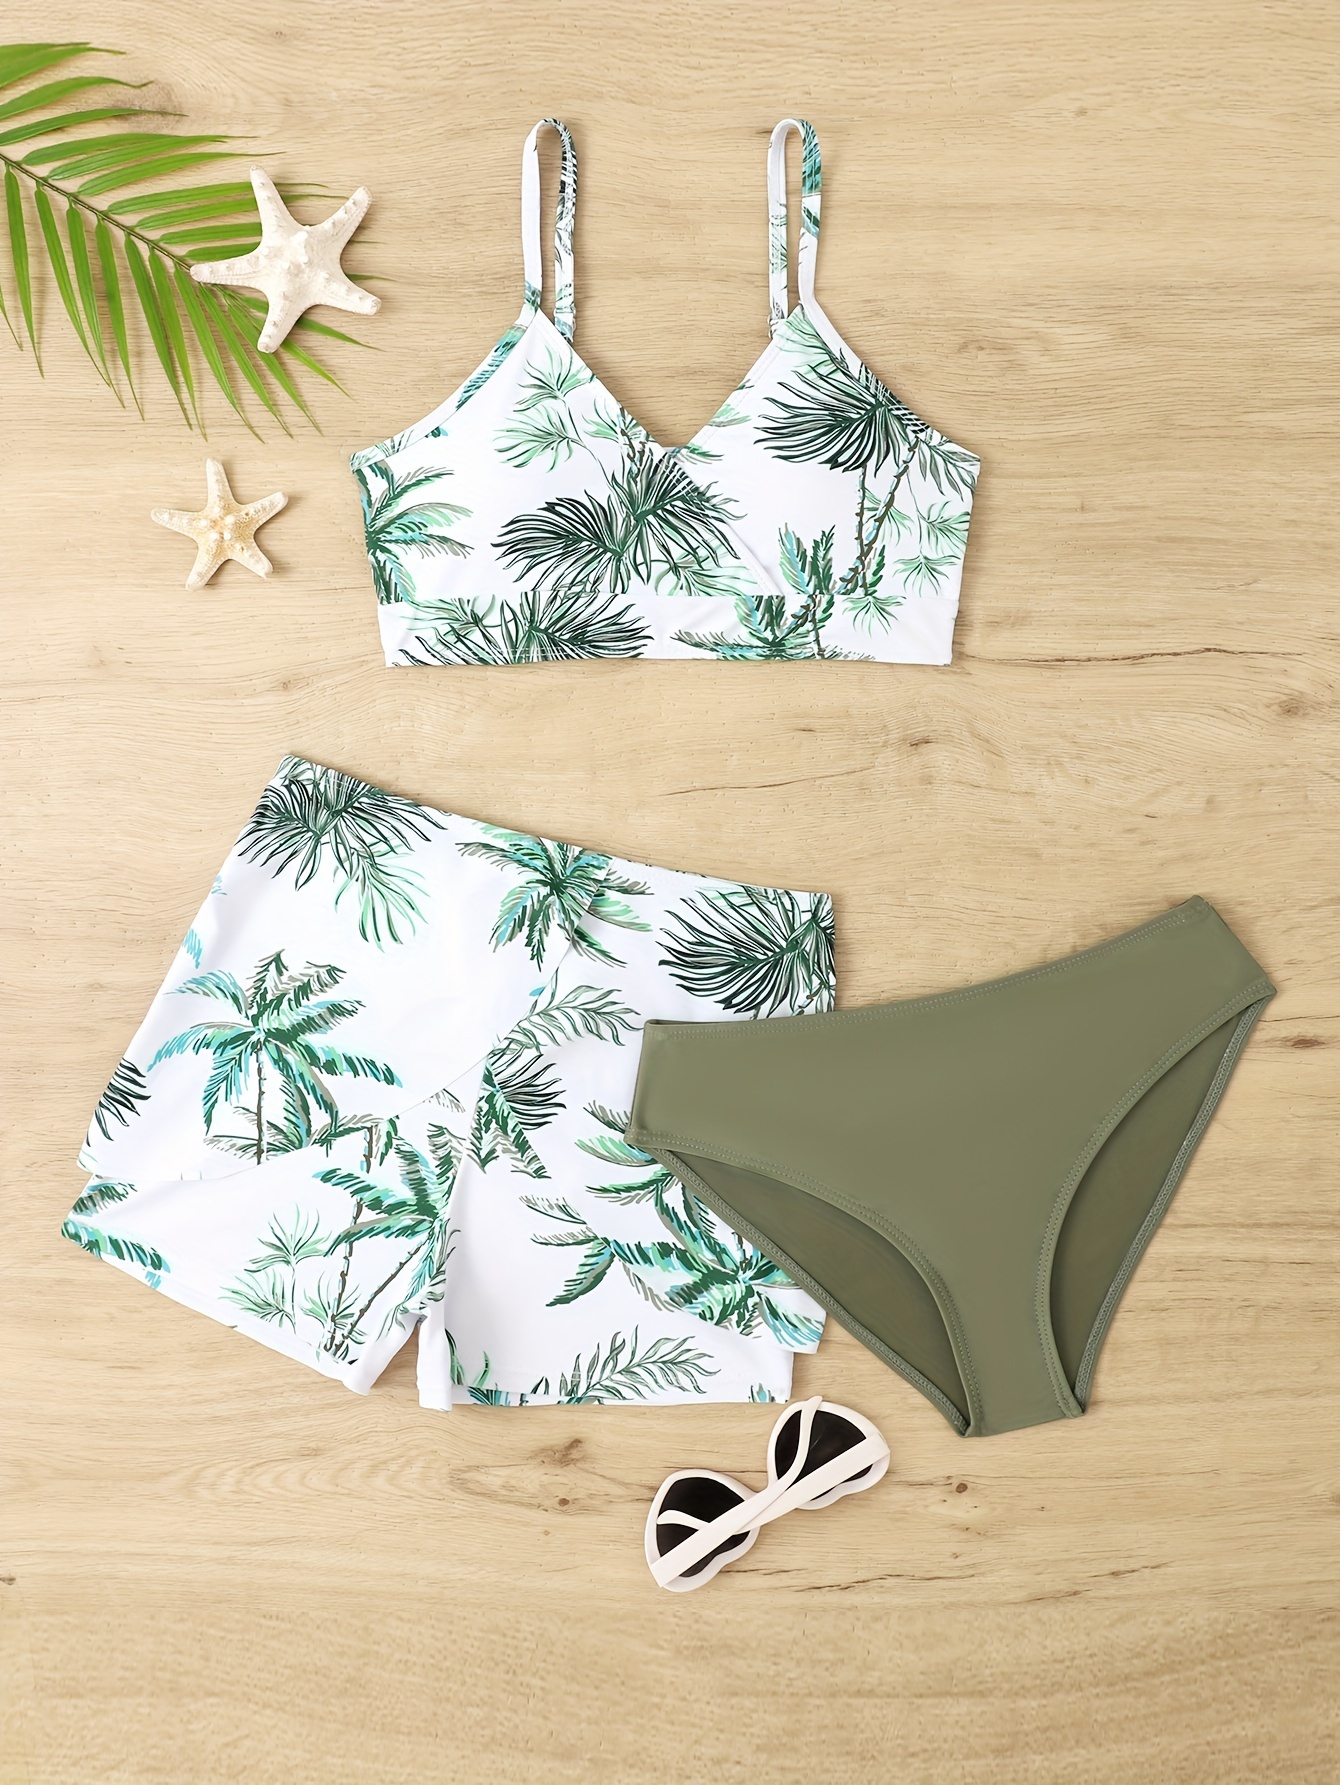 Women Floral Swimwear Tankini Set Bikini Top Boys Shorts Swimsuit Beach  Bathing Suit Plus Size